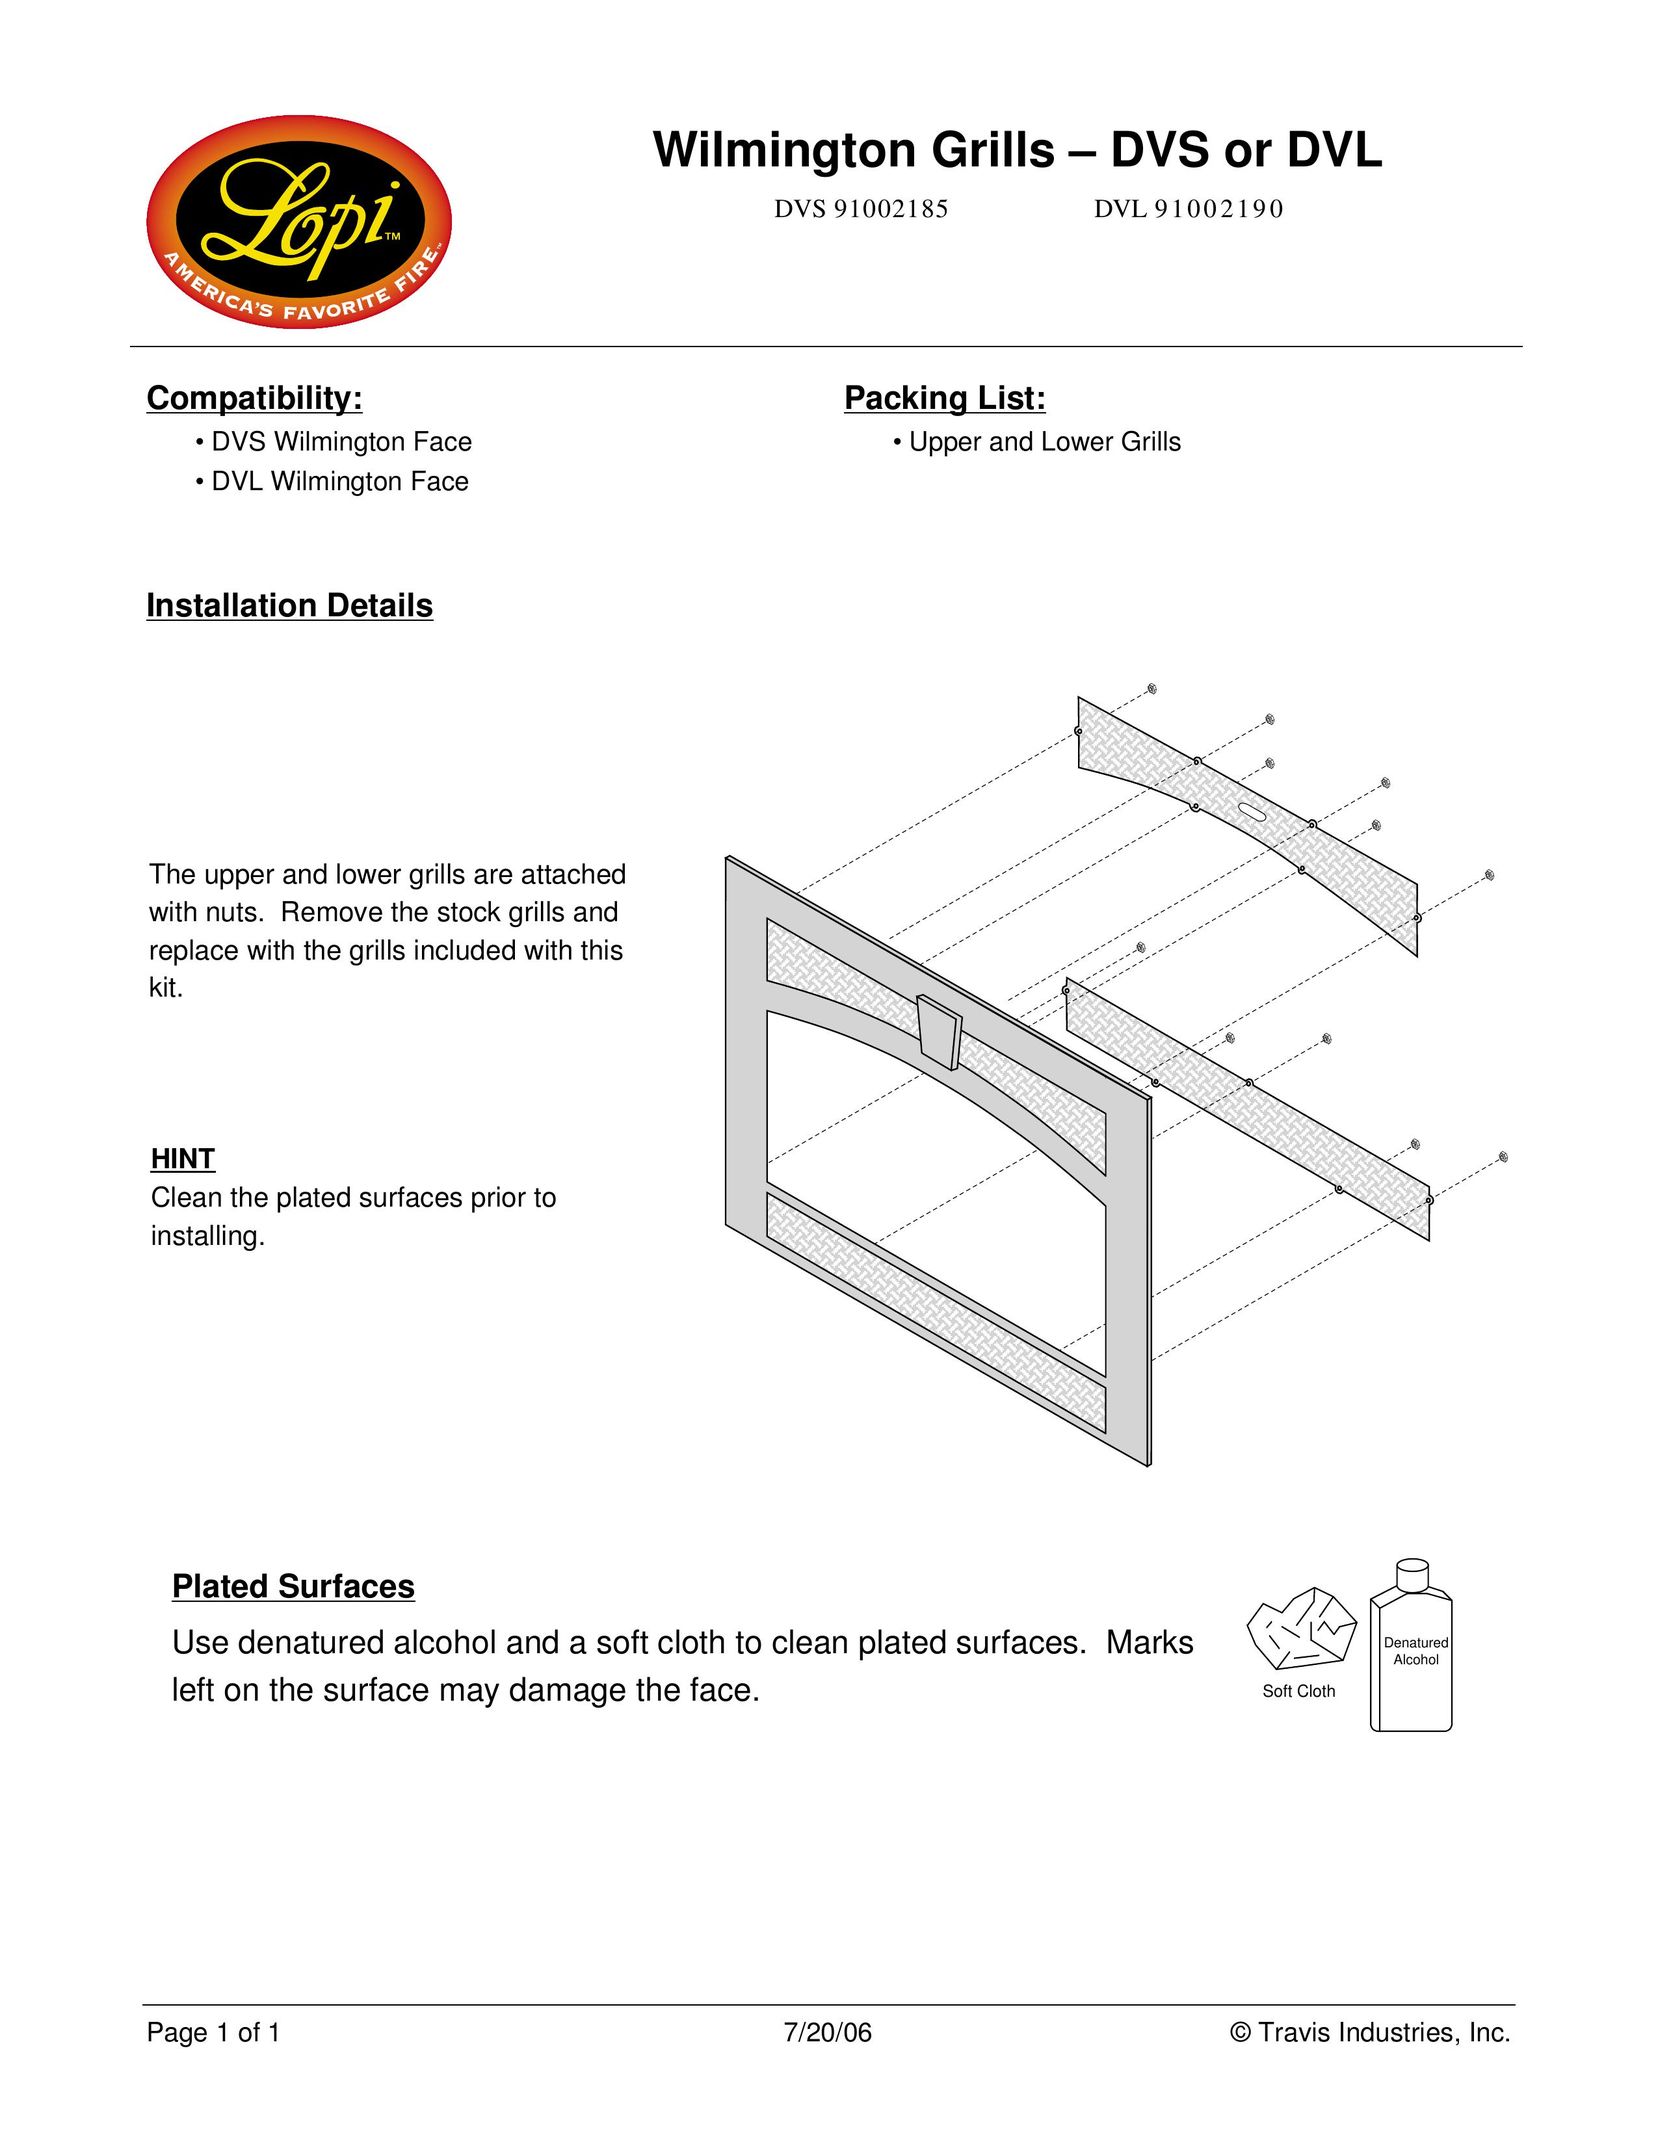 Lopi DVS 91002185 Kitchen Grill User Manual